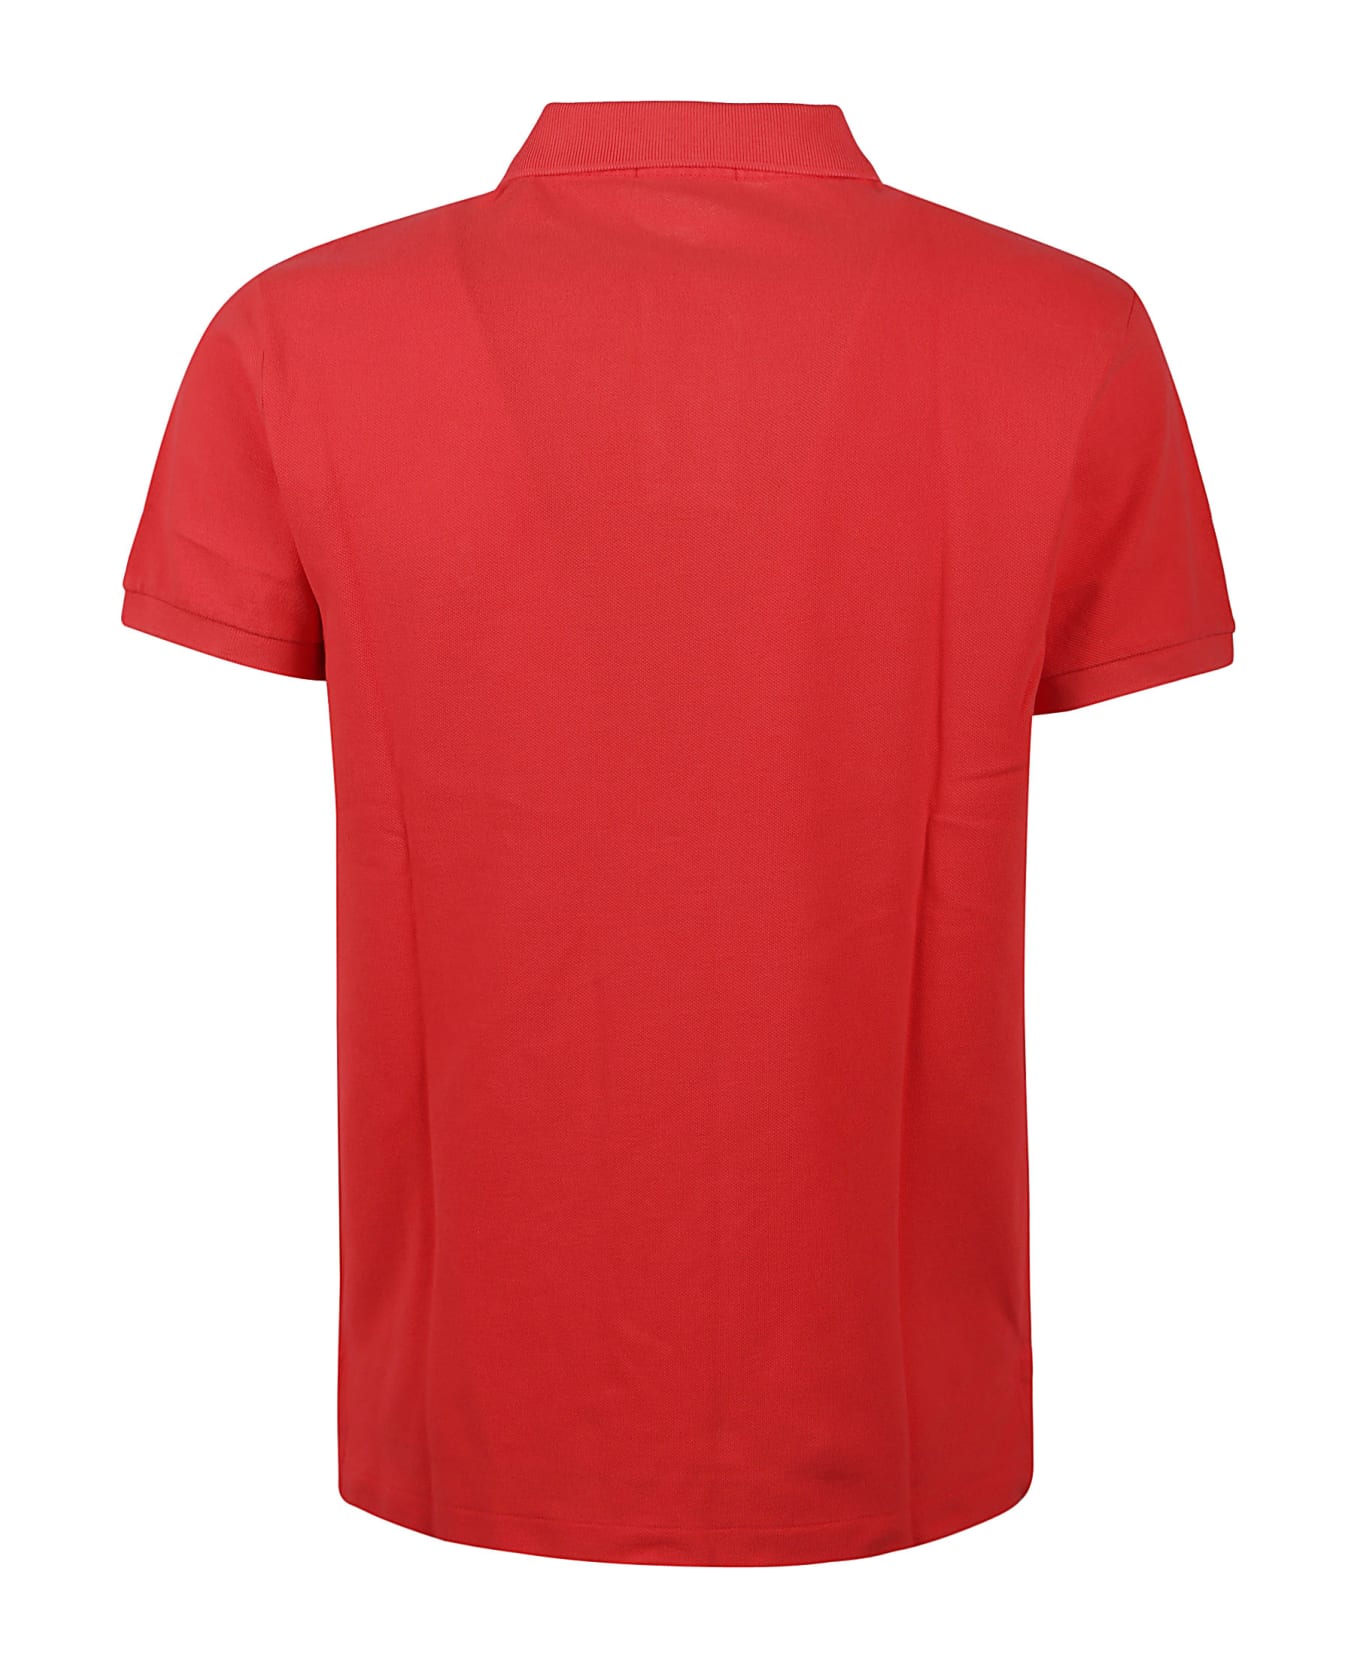 Polo Ralph Lauren Short Sleeve Polo Shirt - Red Reef